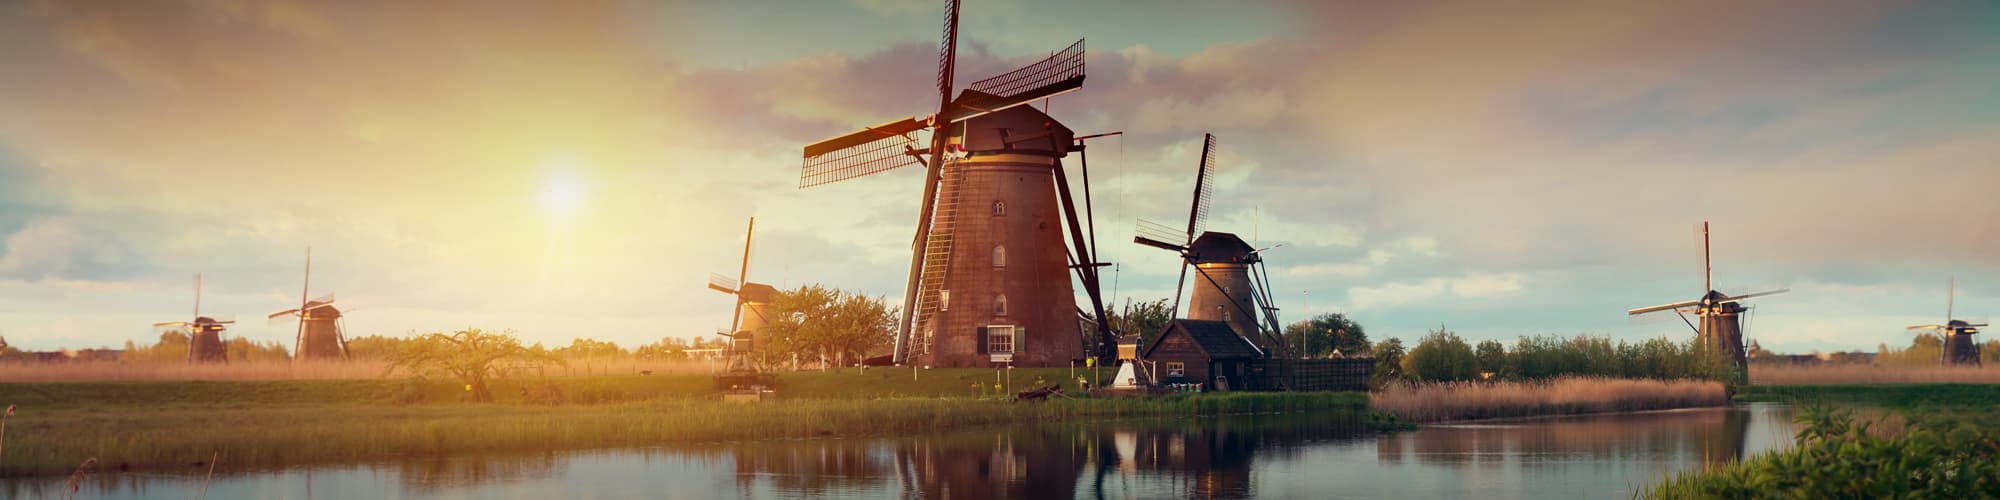 Les Pays-Bas à vélo © kishivan / Adobe Stock